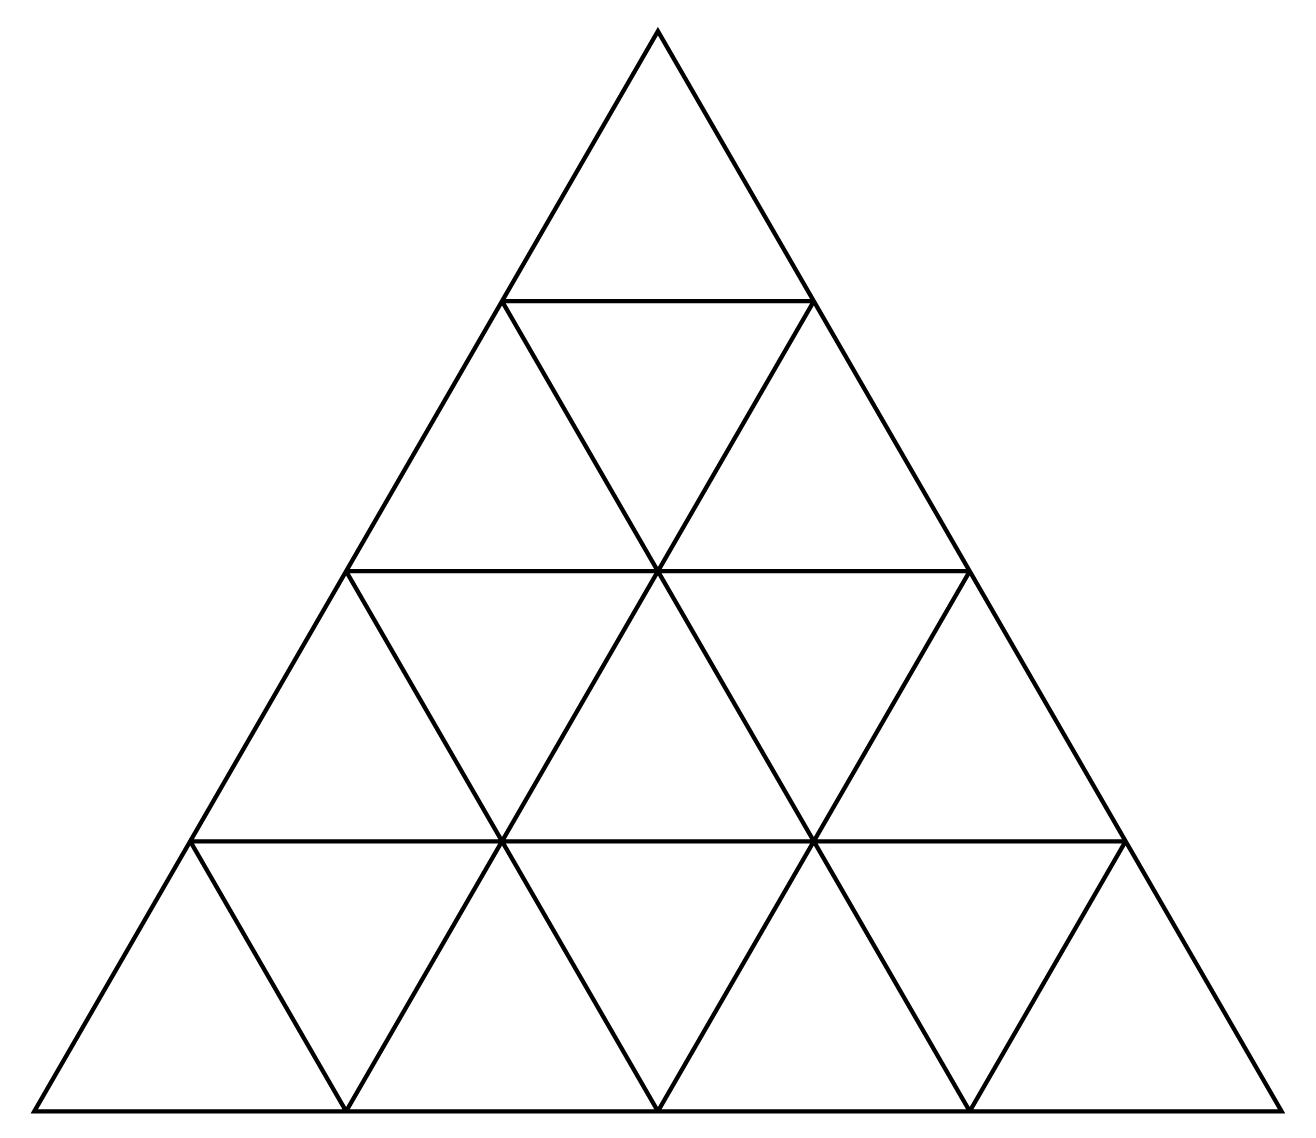 triangles-1.gif